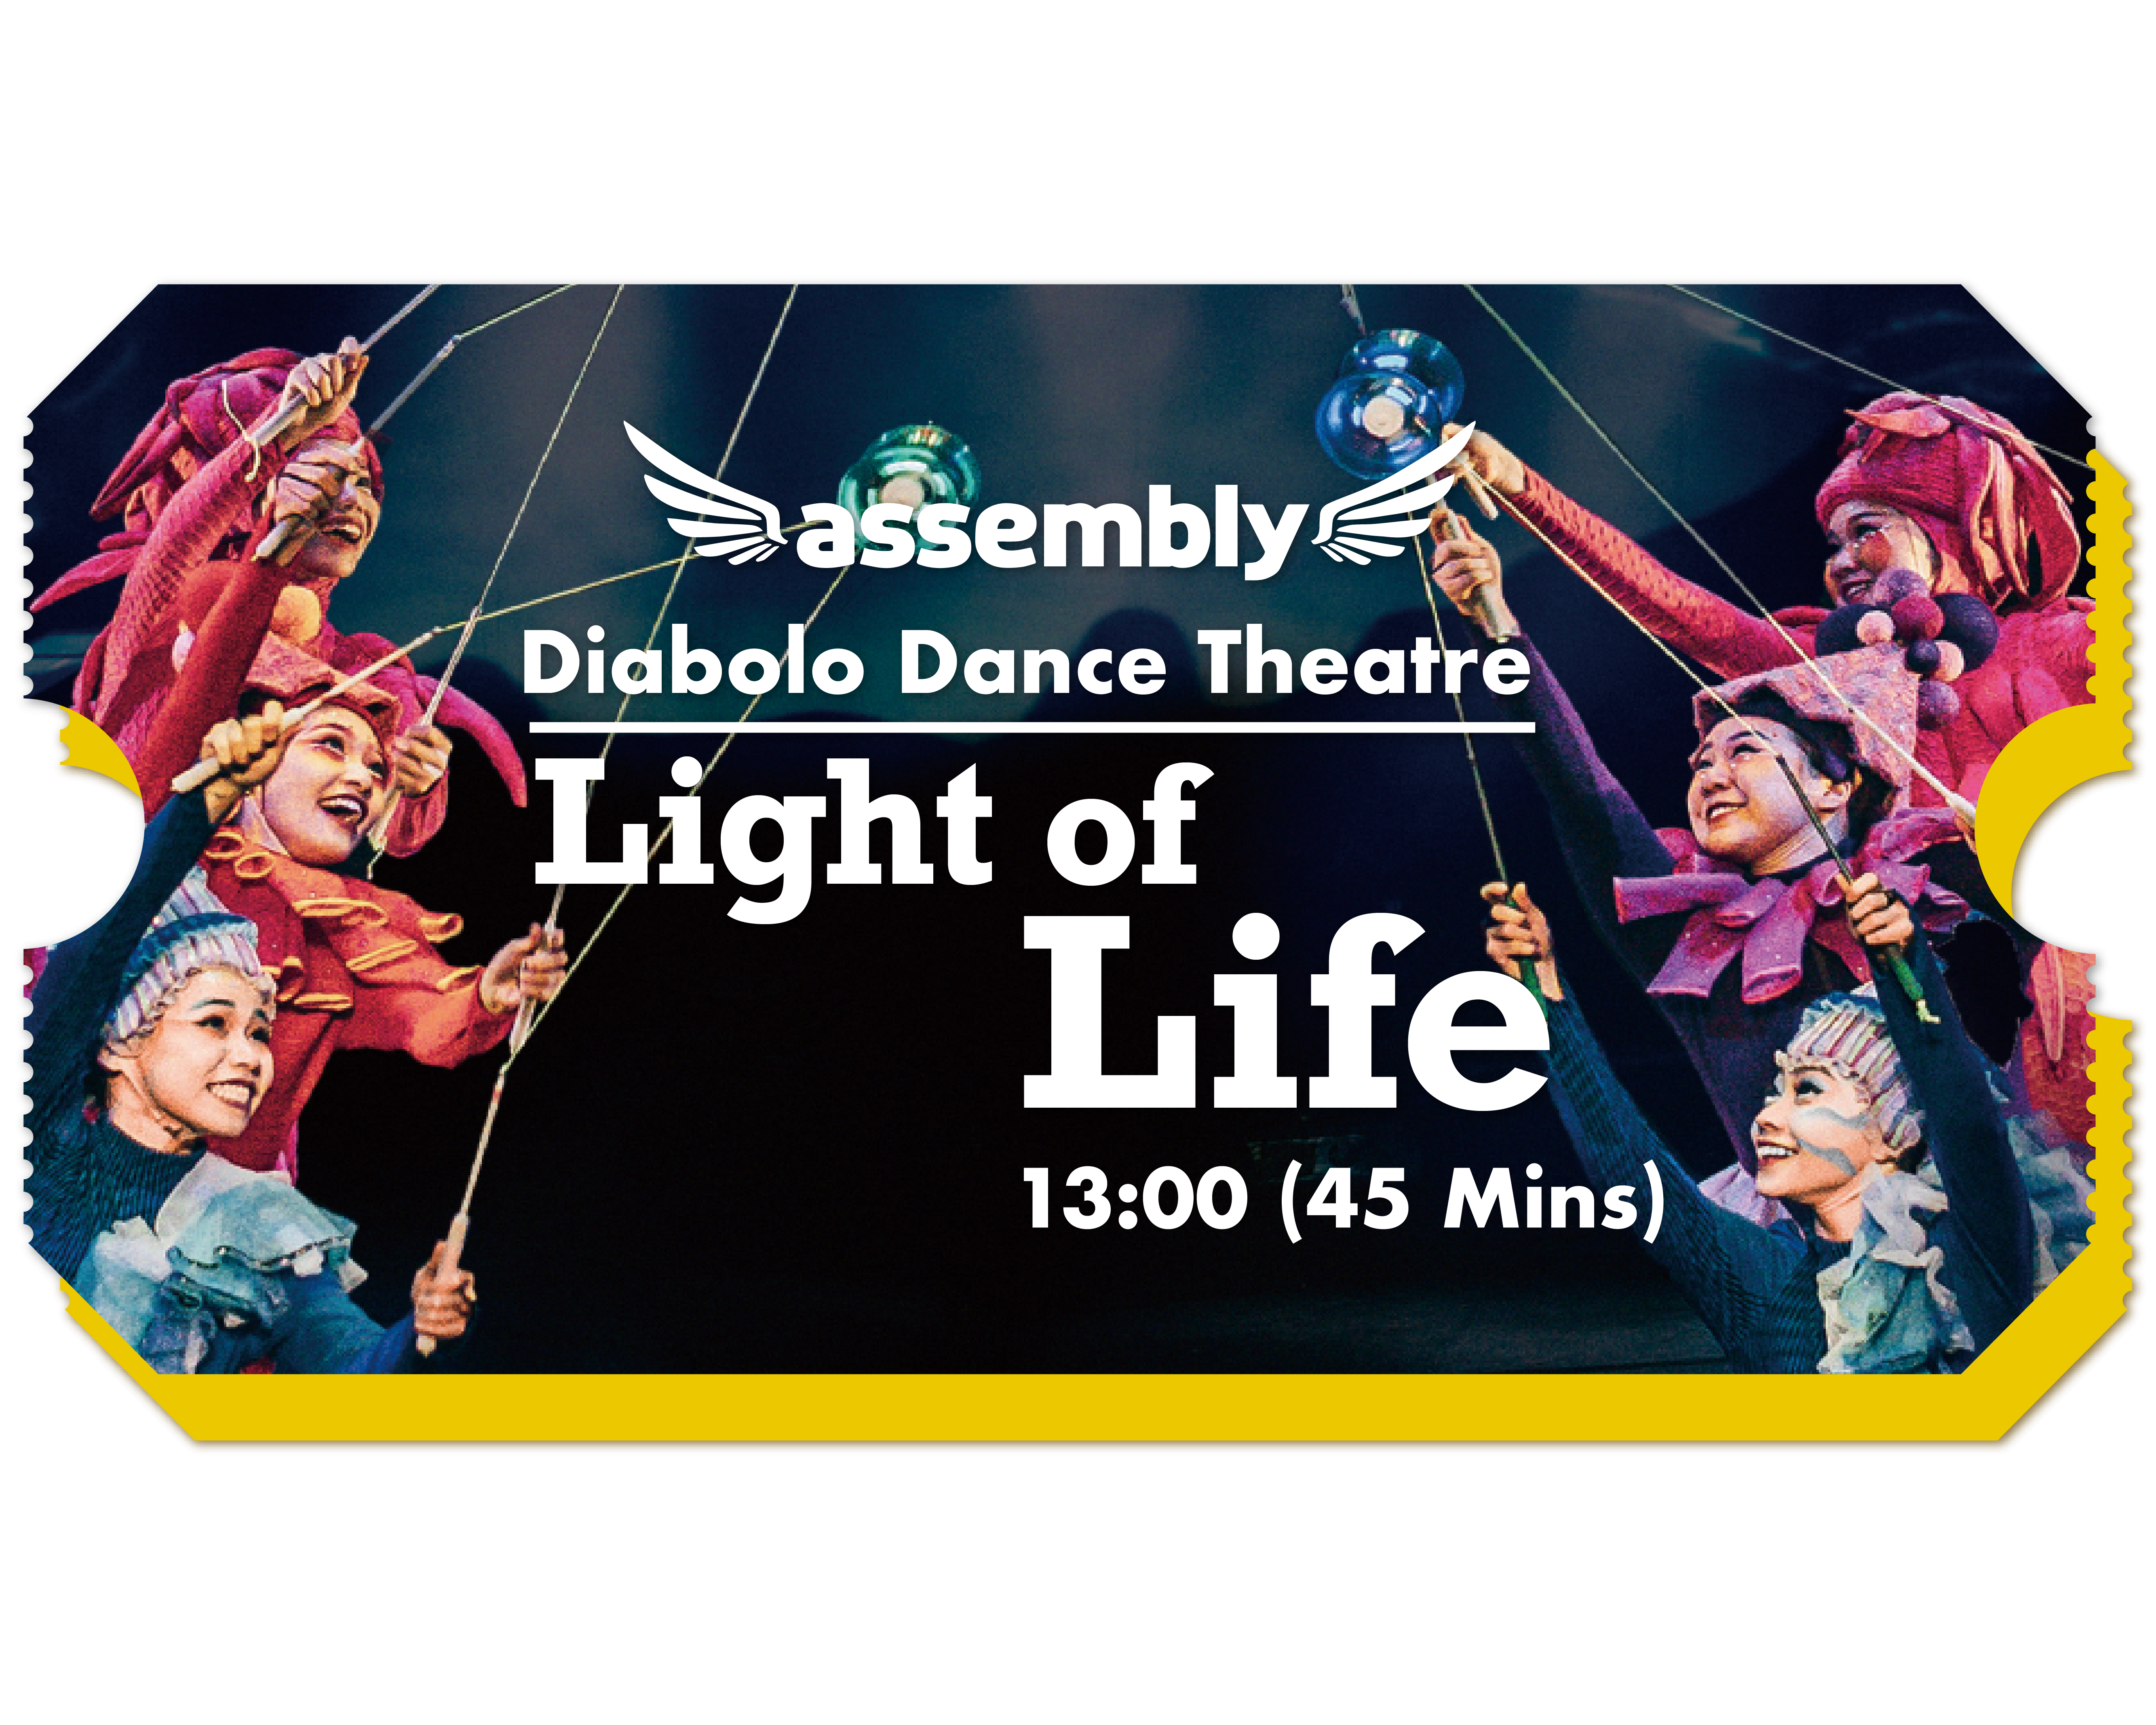 Light of Life - Diabolo Dnace Theatre